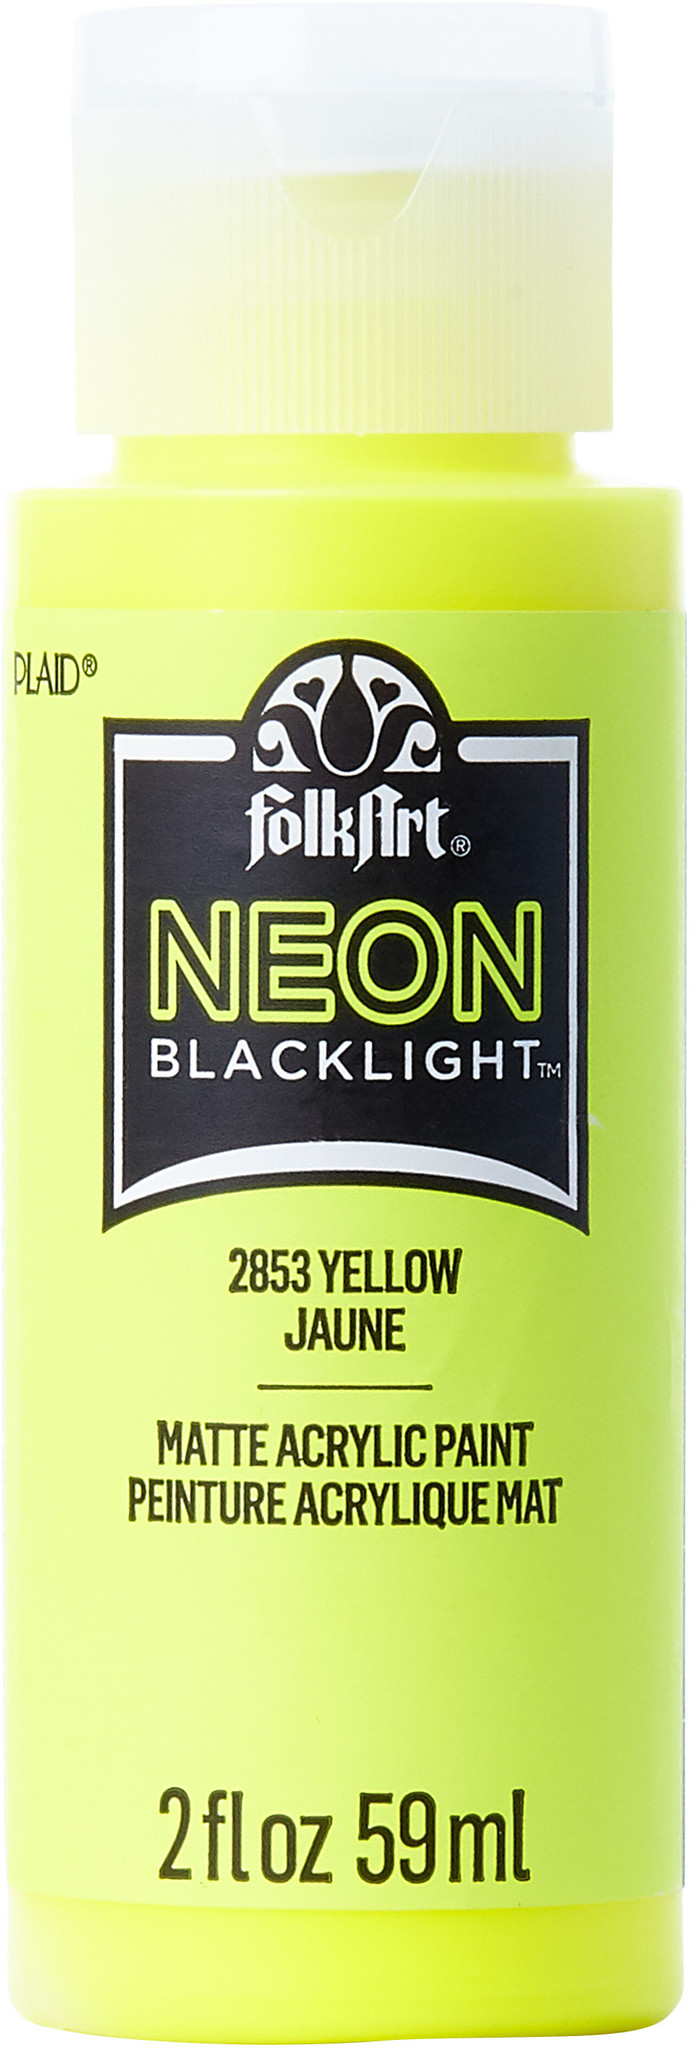 FolkArt Neon Blacklight Acrylic Craft Paint, Matte Finish, Green, 2 fl oz 